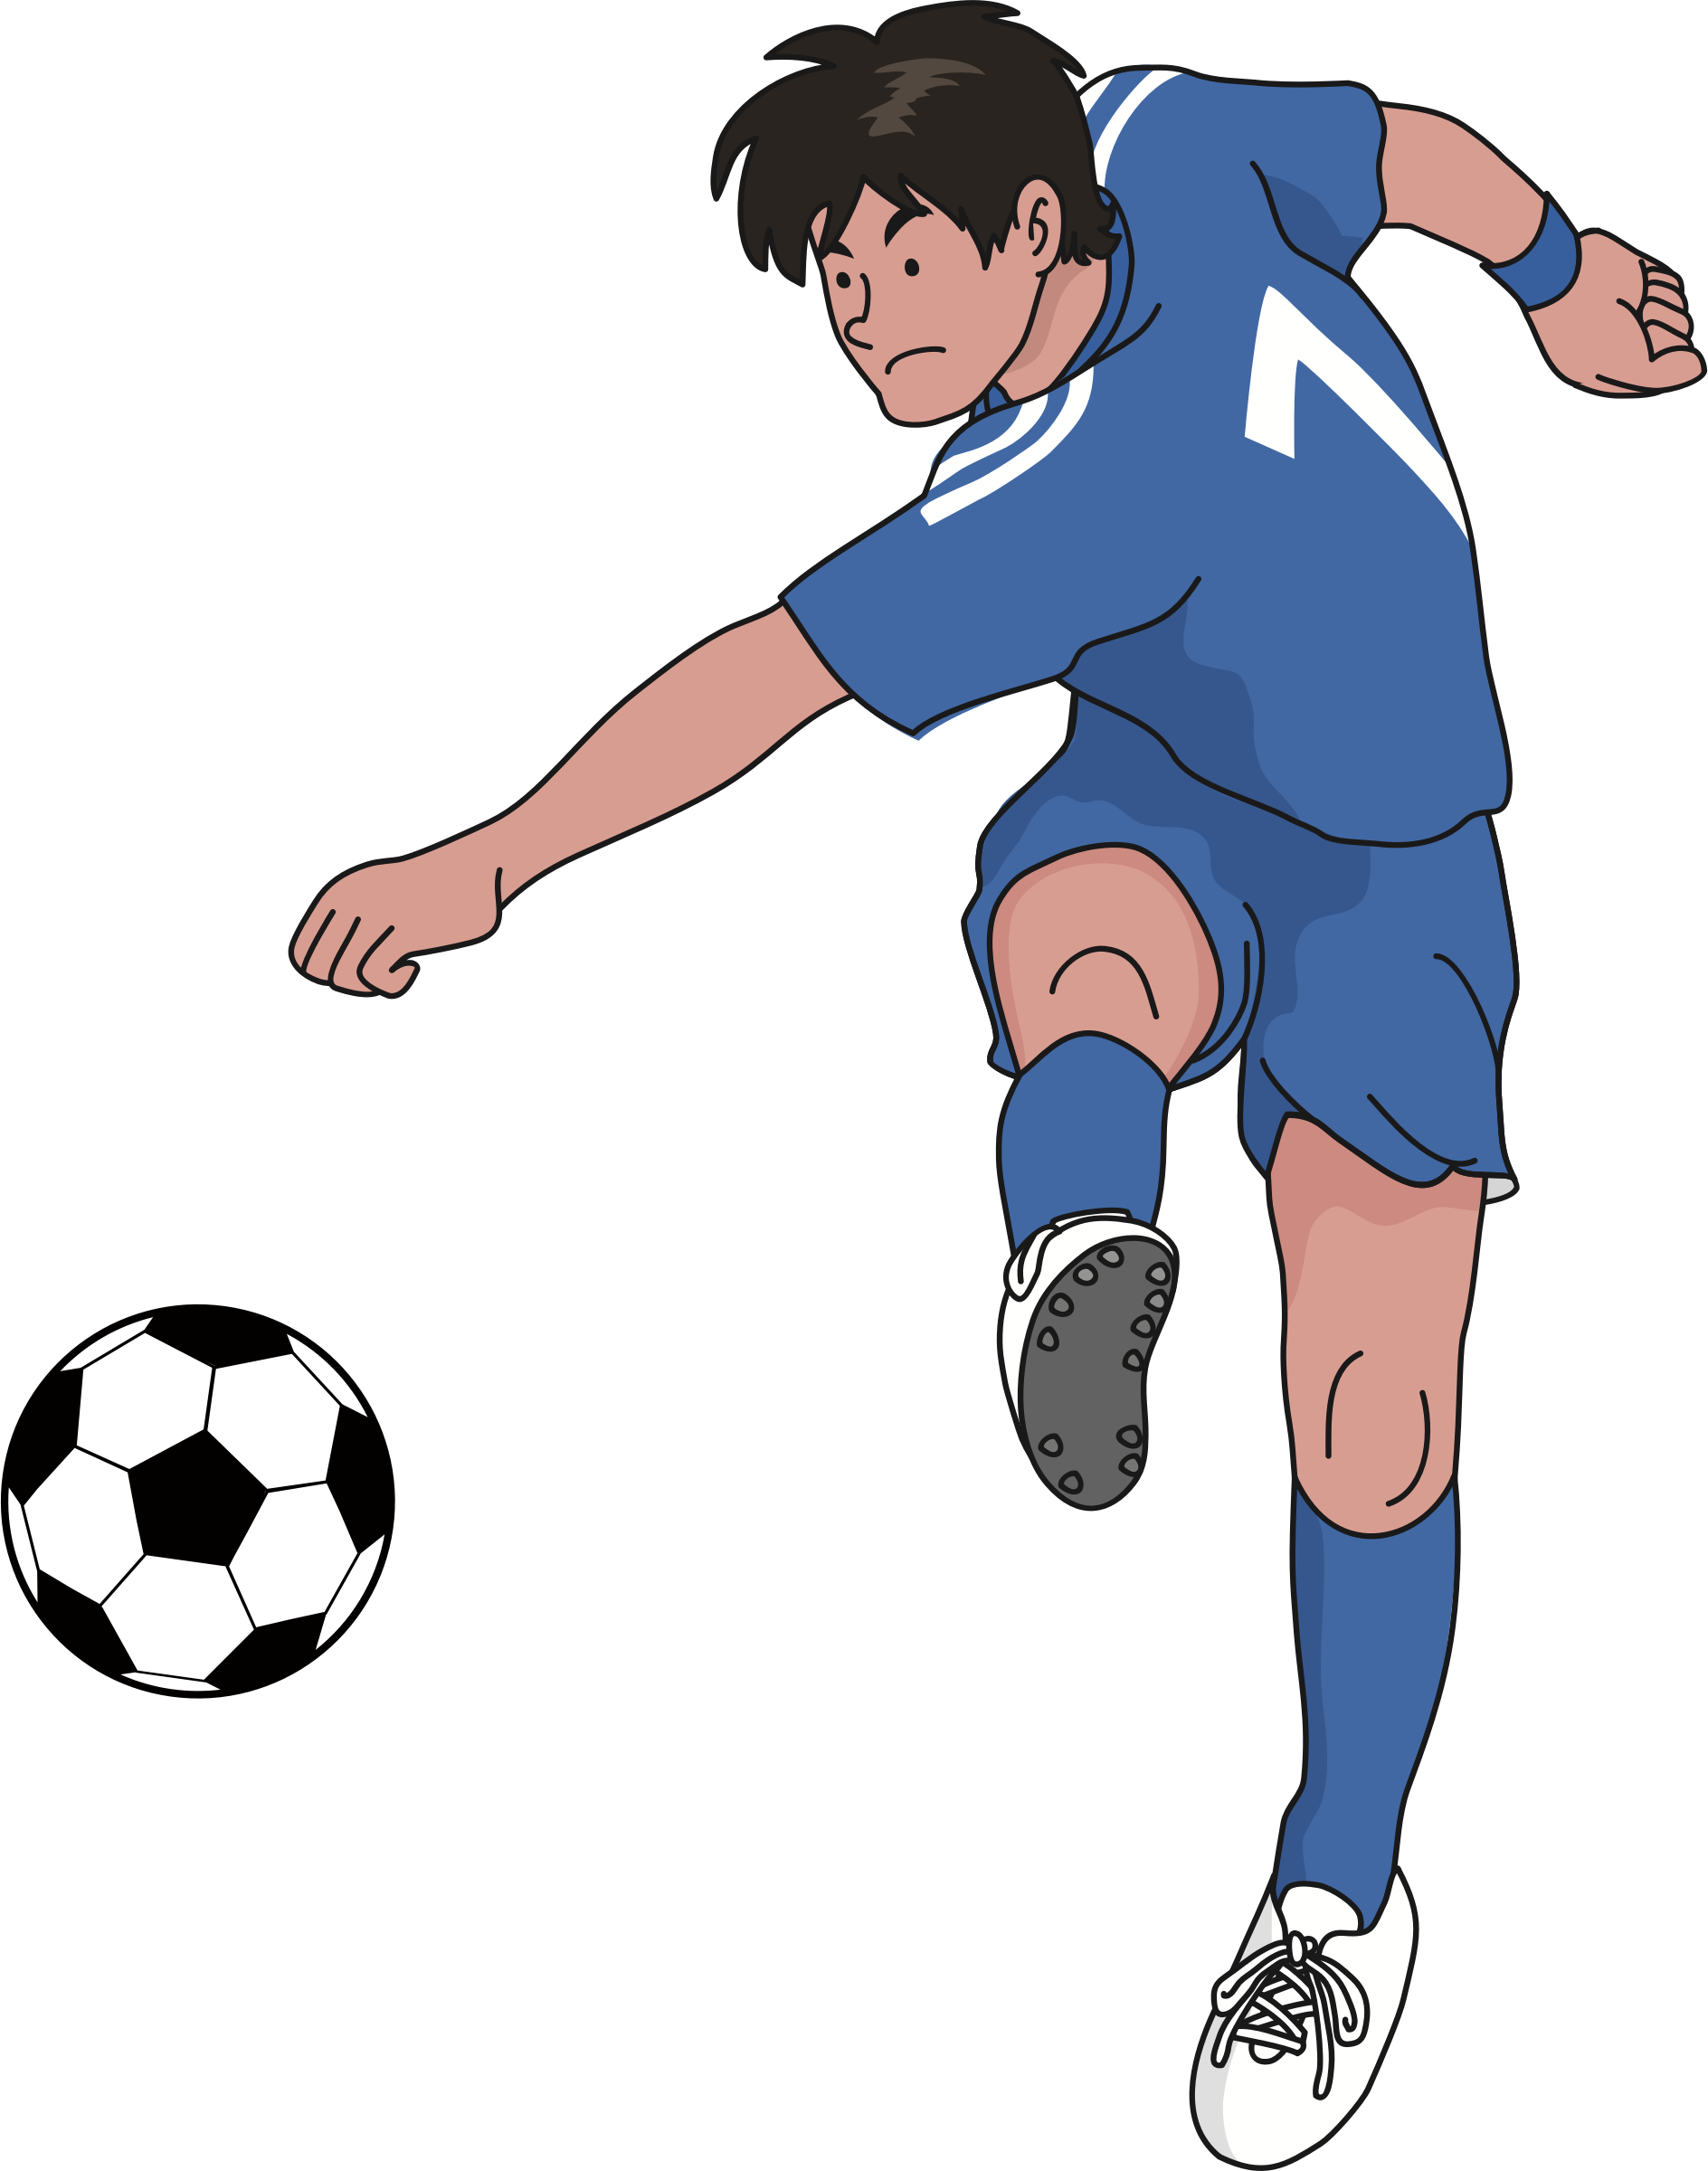 Kick Soccer Ball by oksmith